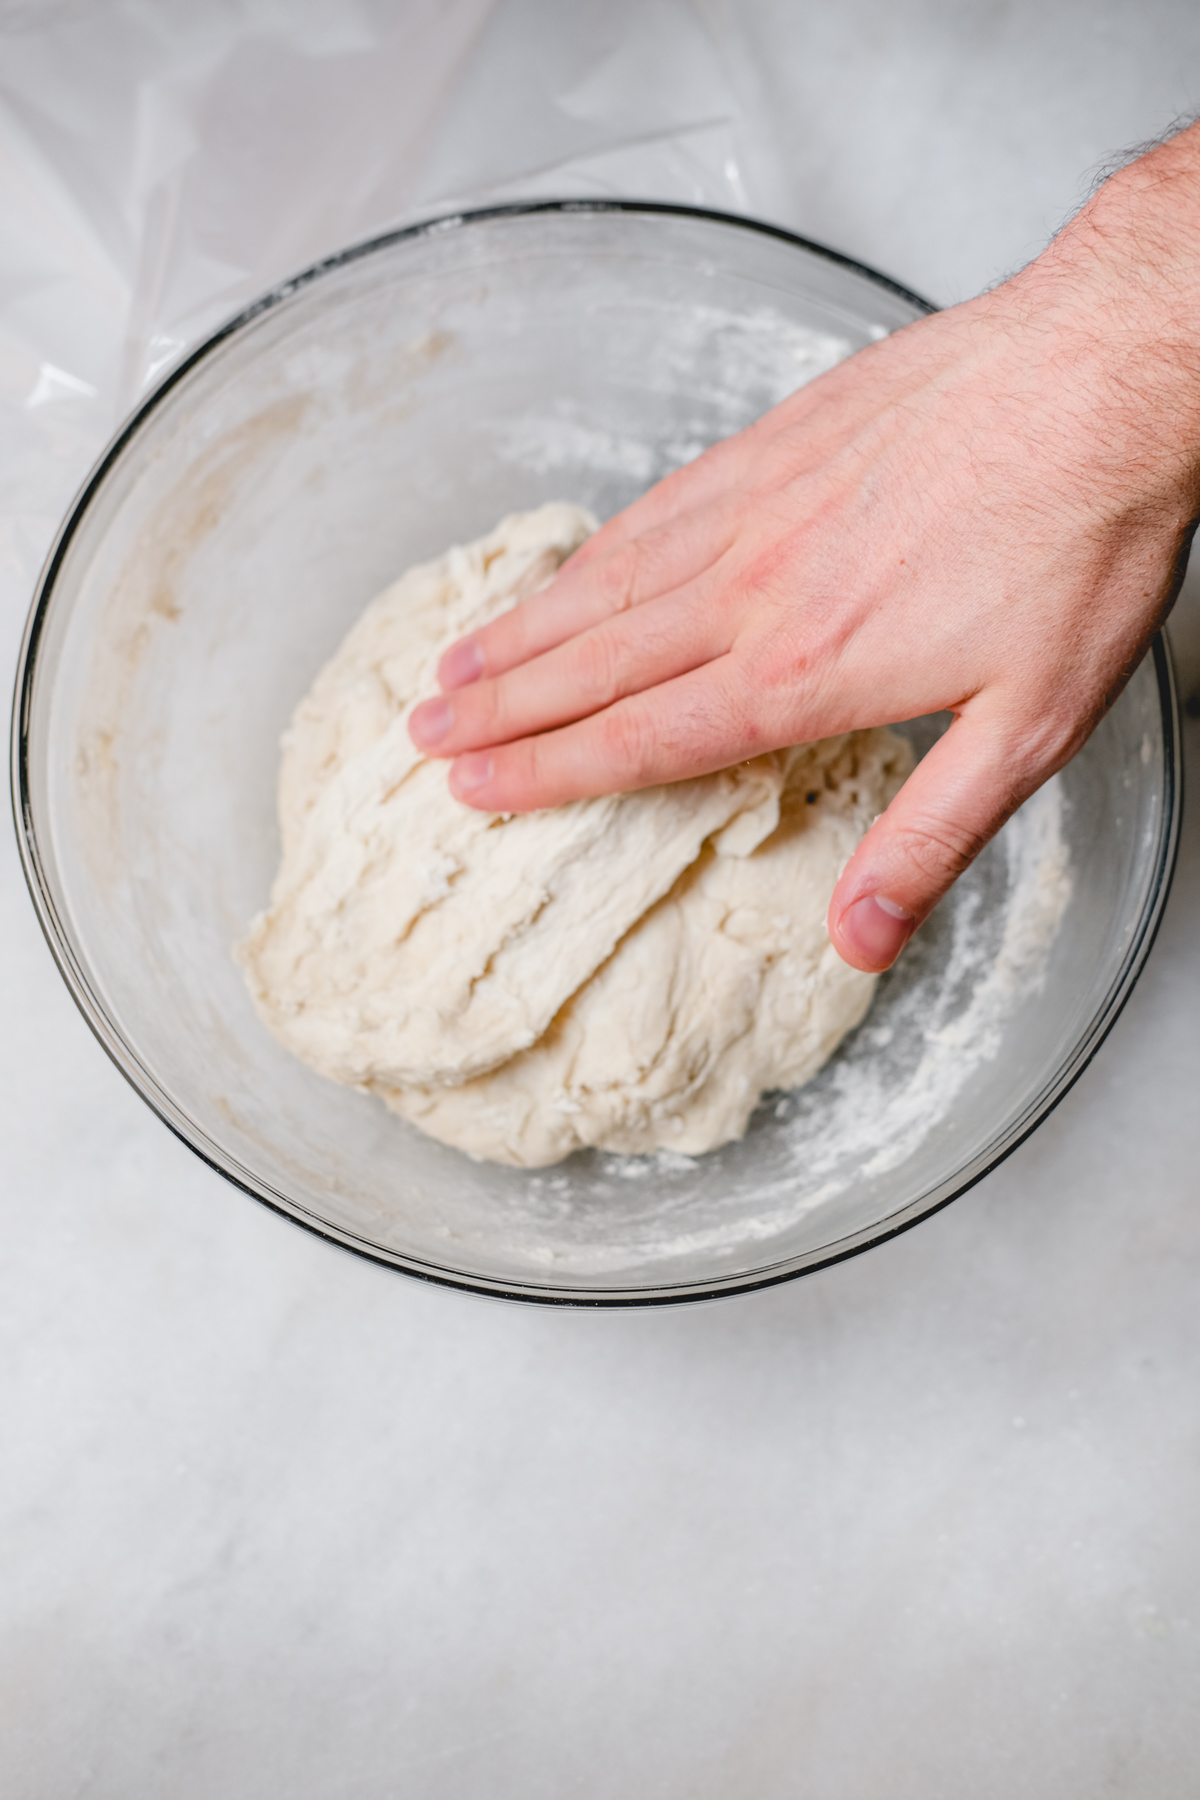 folding sourdough bread dough on top